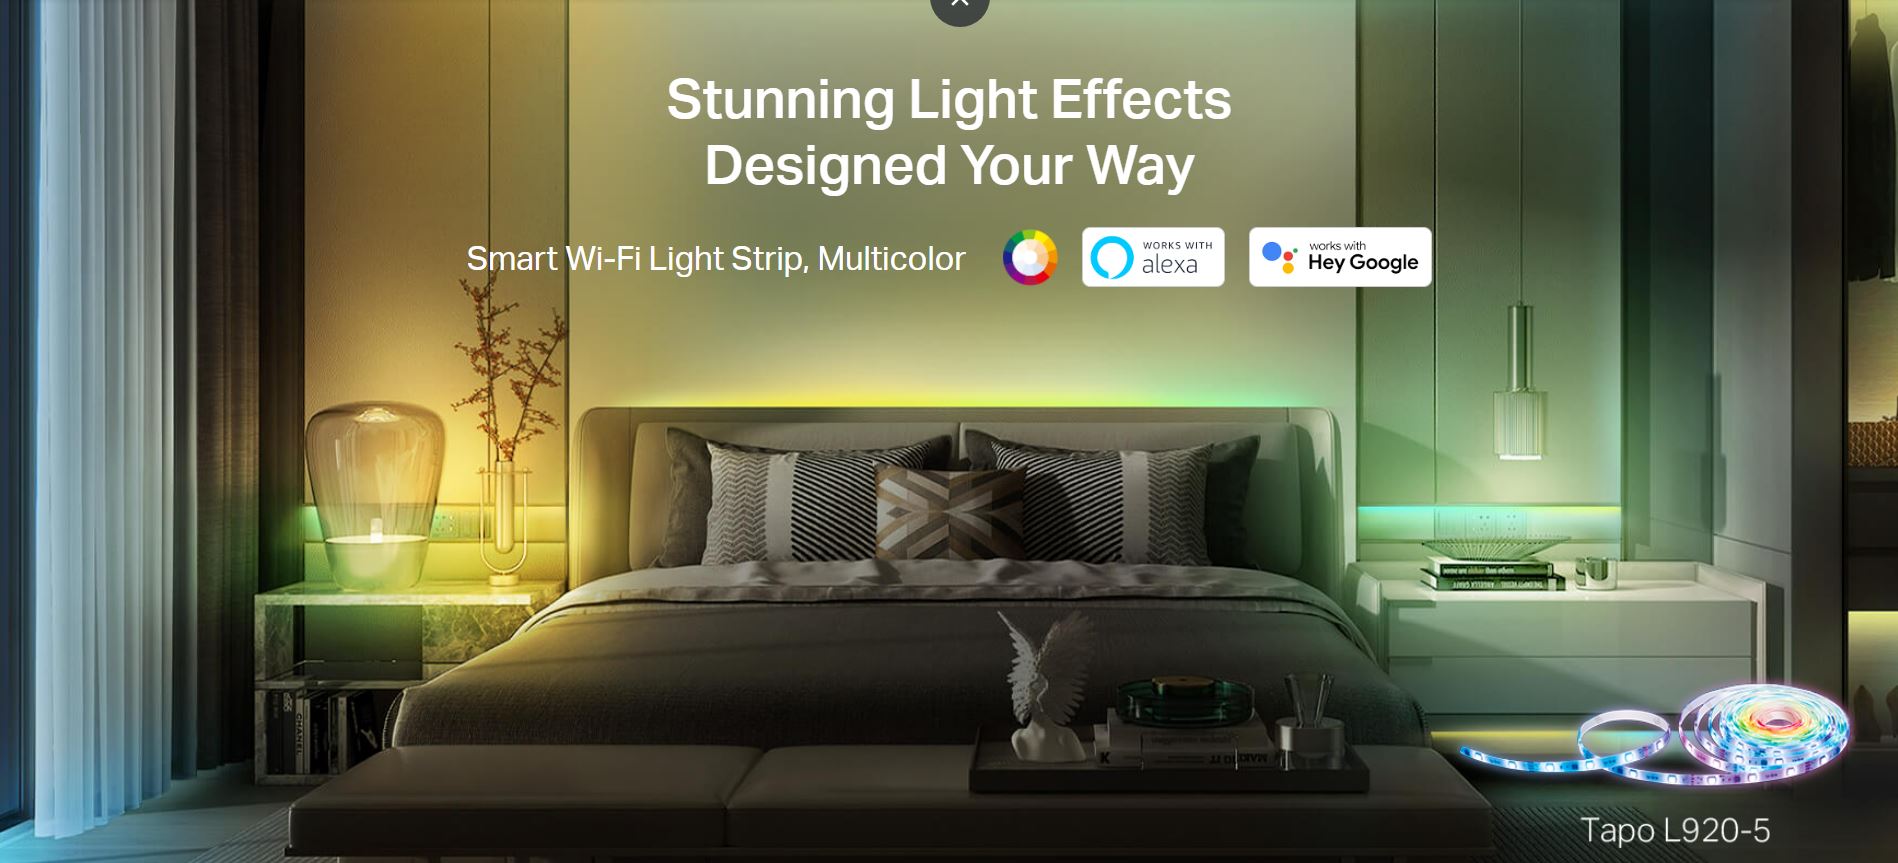 TP link tapo Smart Wi-Fi Light Strip - Multicolor - light segments - schedule and timer - voice control - App control - Tapo L920-5 - Amman Jordan - Pccircle